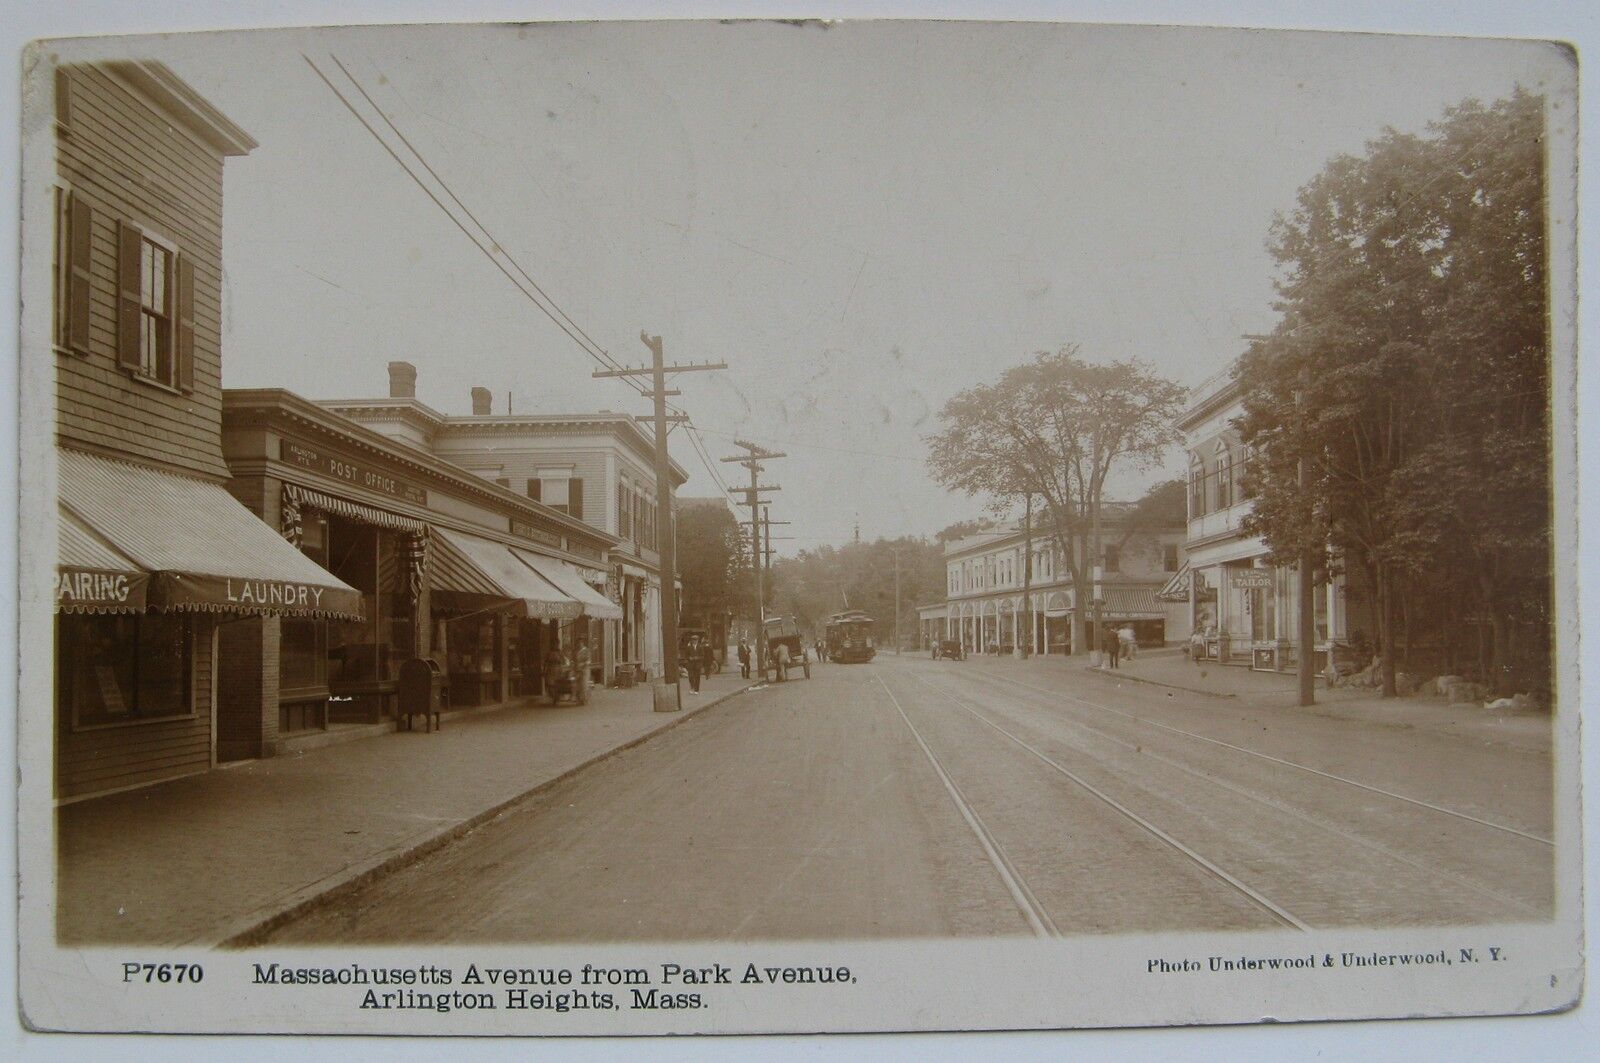 Arlington Heights, Ma. 1920 Real Photo Postcard Mass. Ave Park Ave. Heights